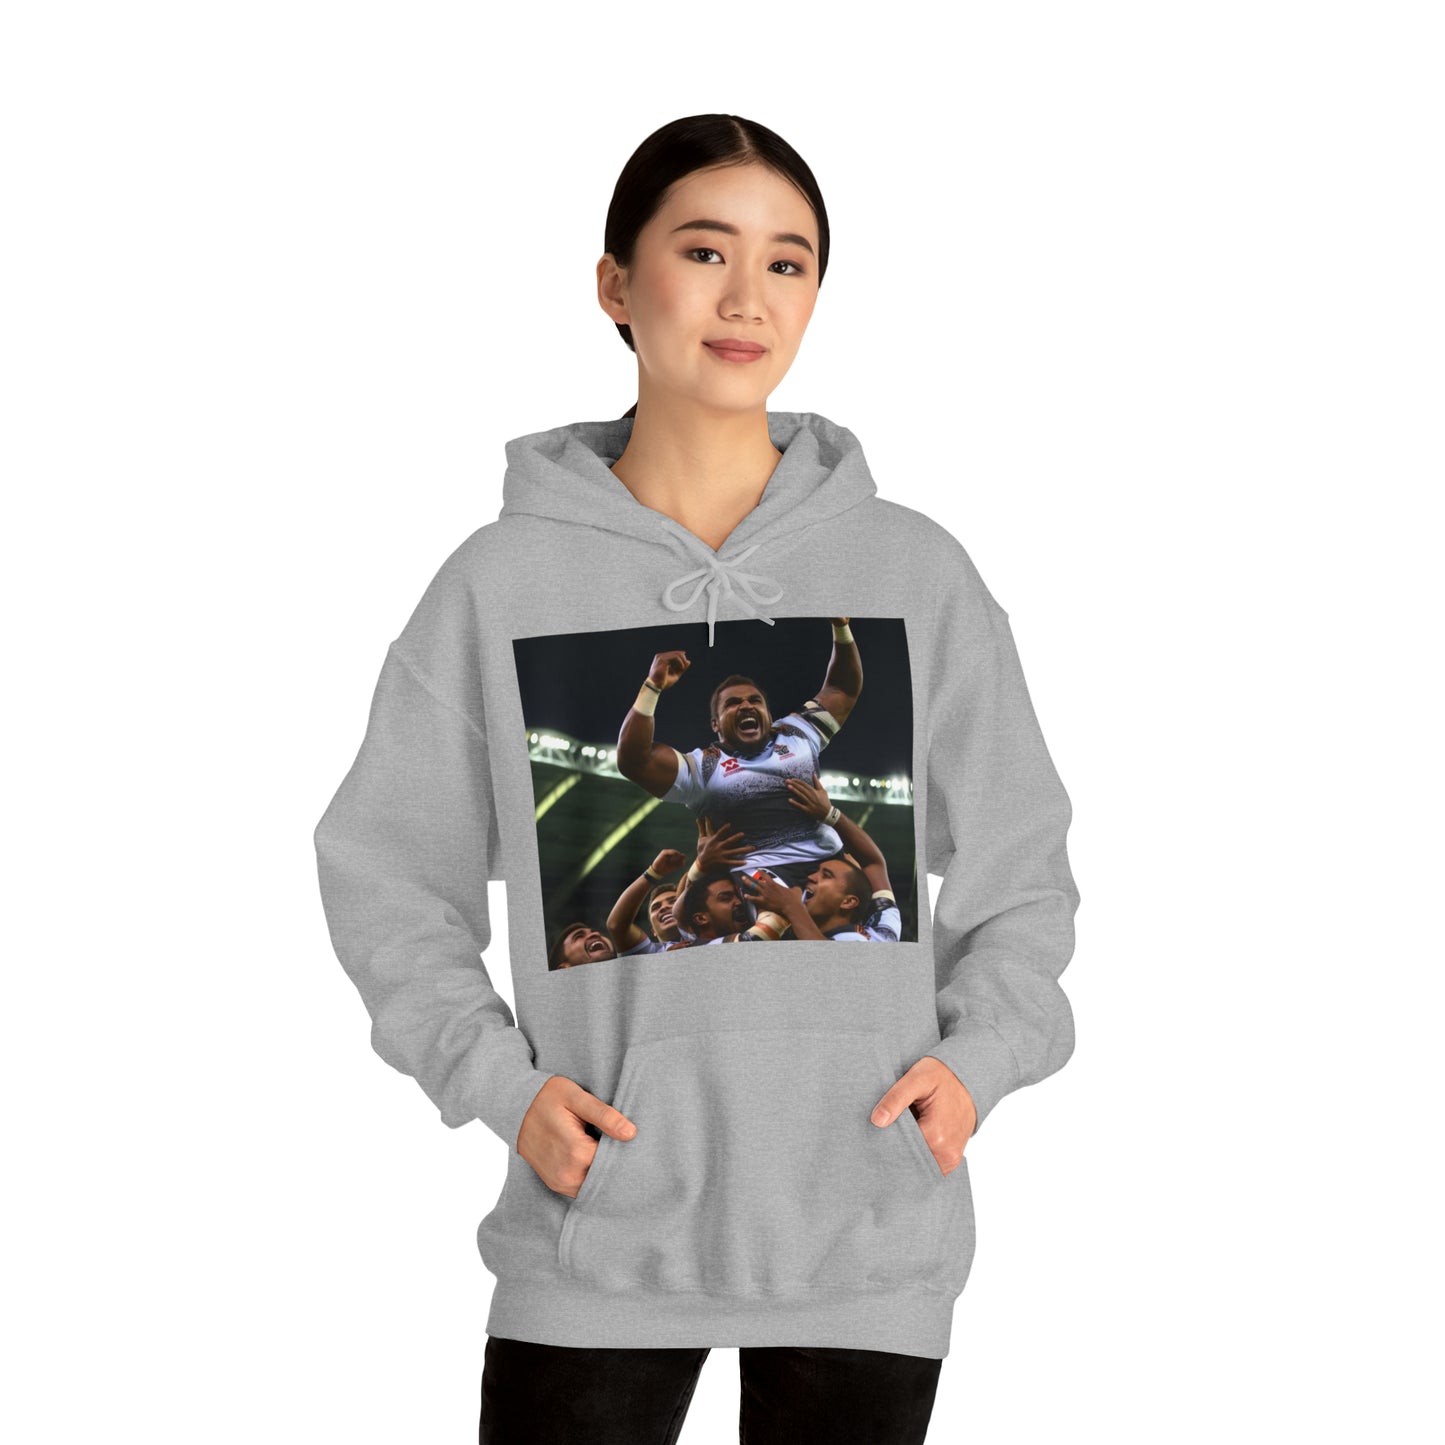 Fiji RWC Celebration - light hoodies